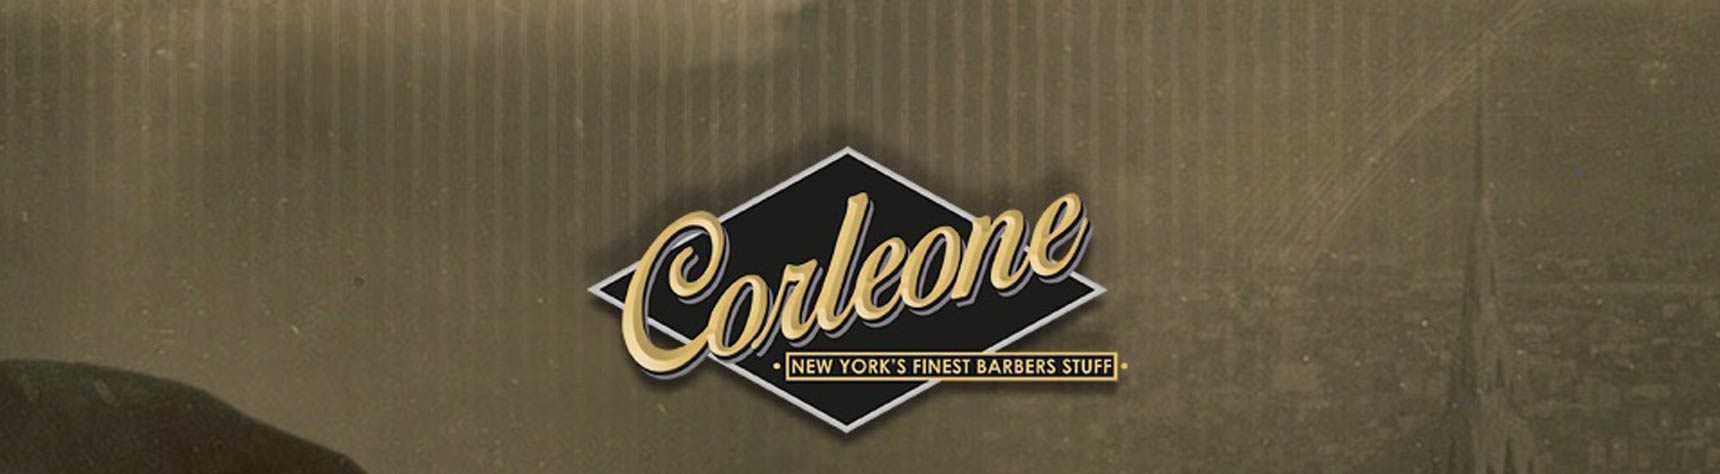 Corleone Barber Rotterdam